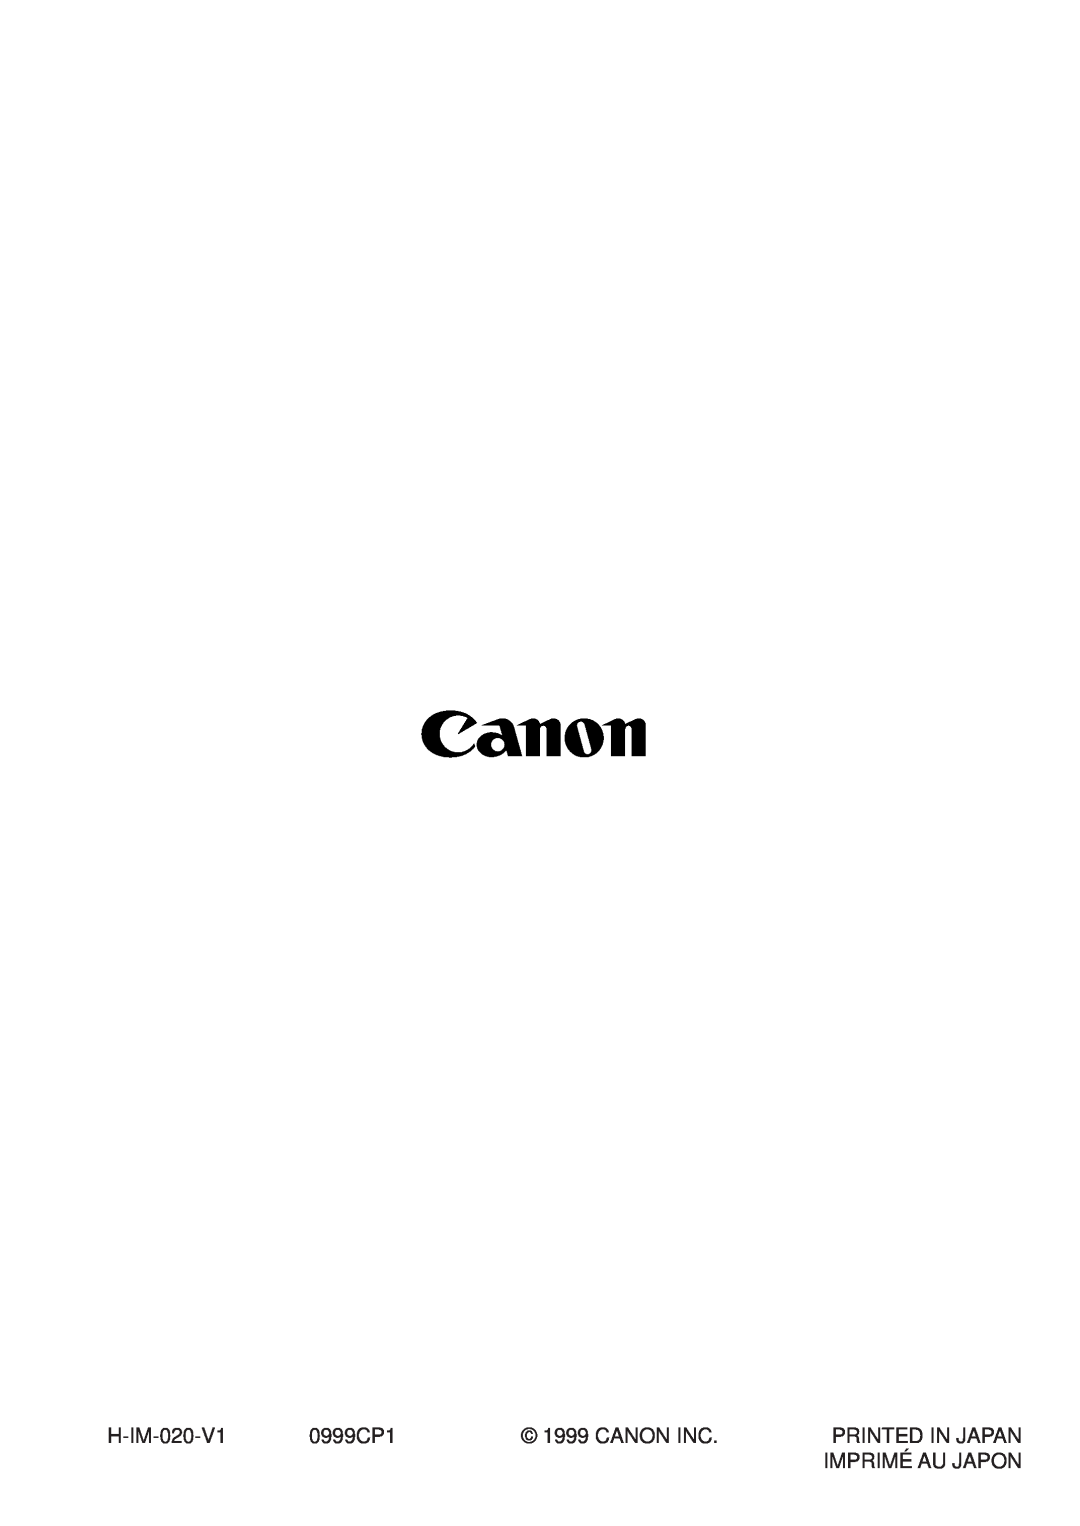 Canon CD-300 manual H-IM-020-V1, 0999CP1, Canon Inc, Printed In Japan, Imprimé Au Japon 